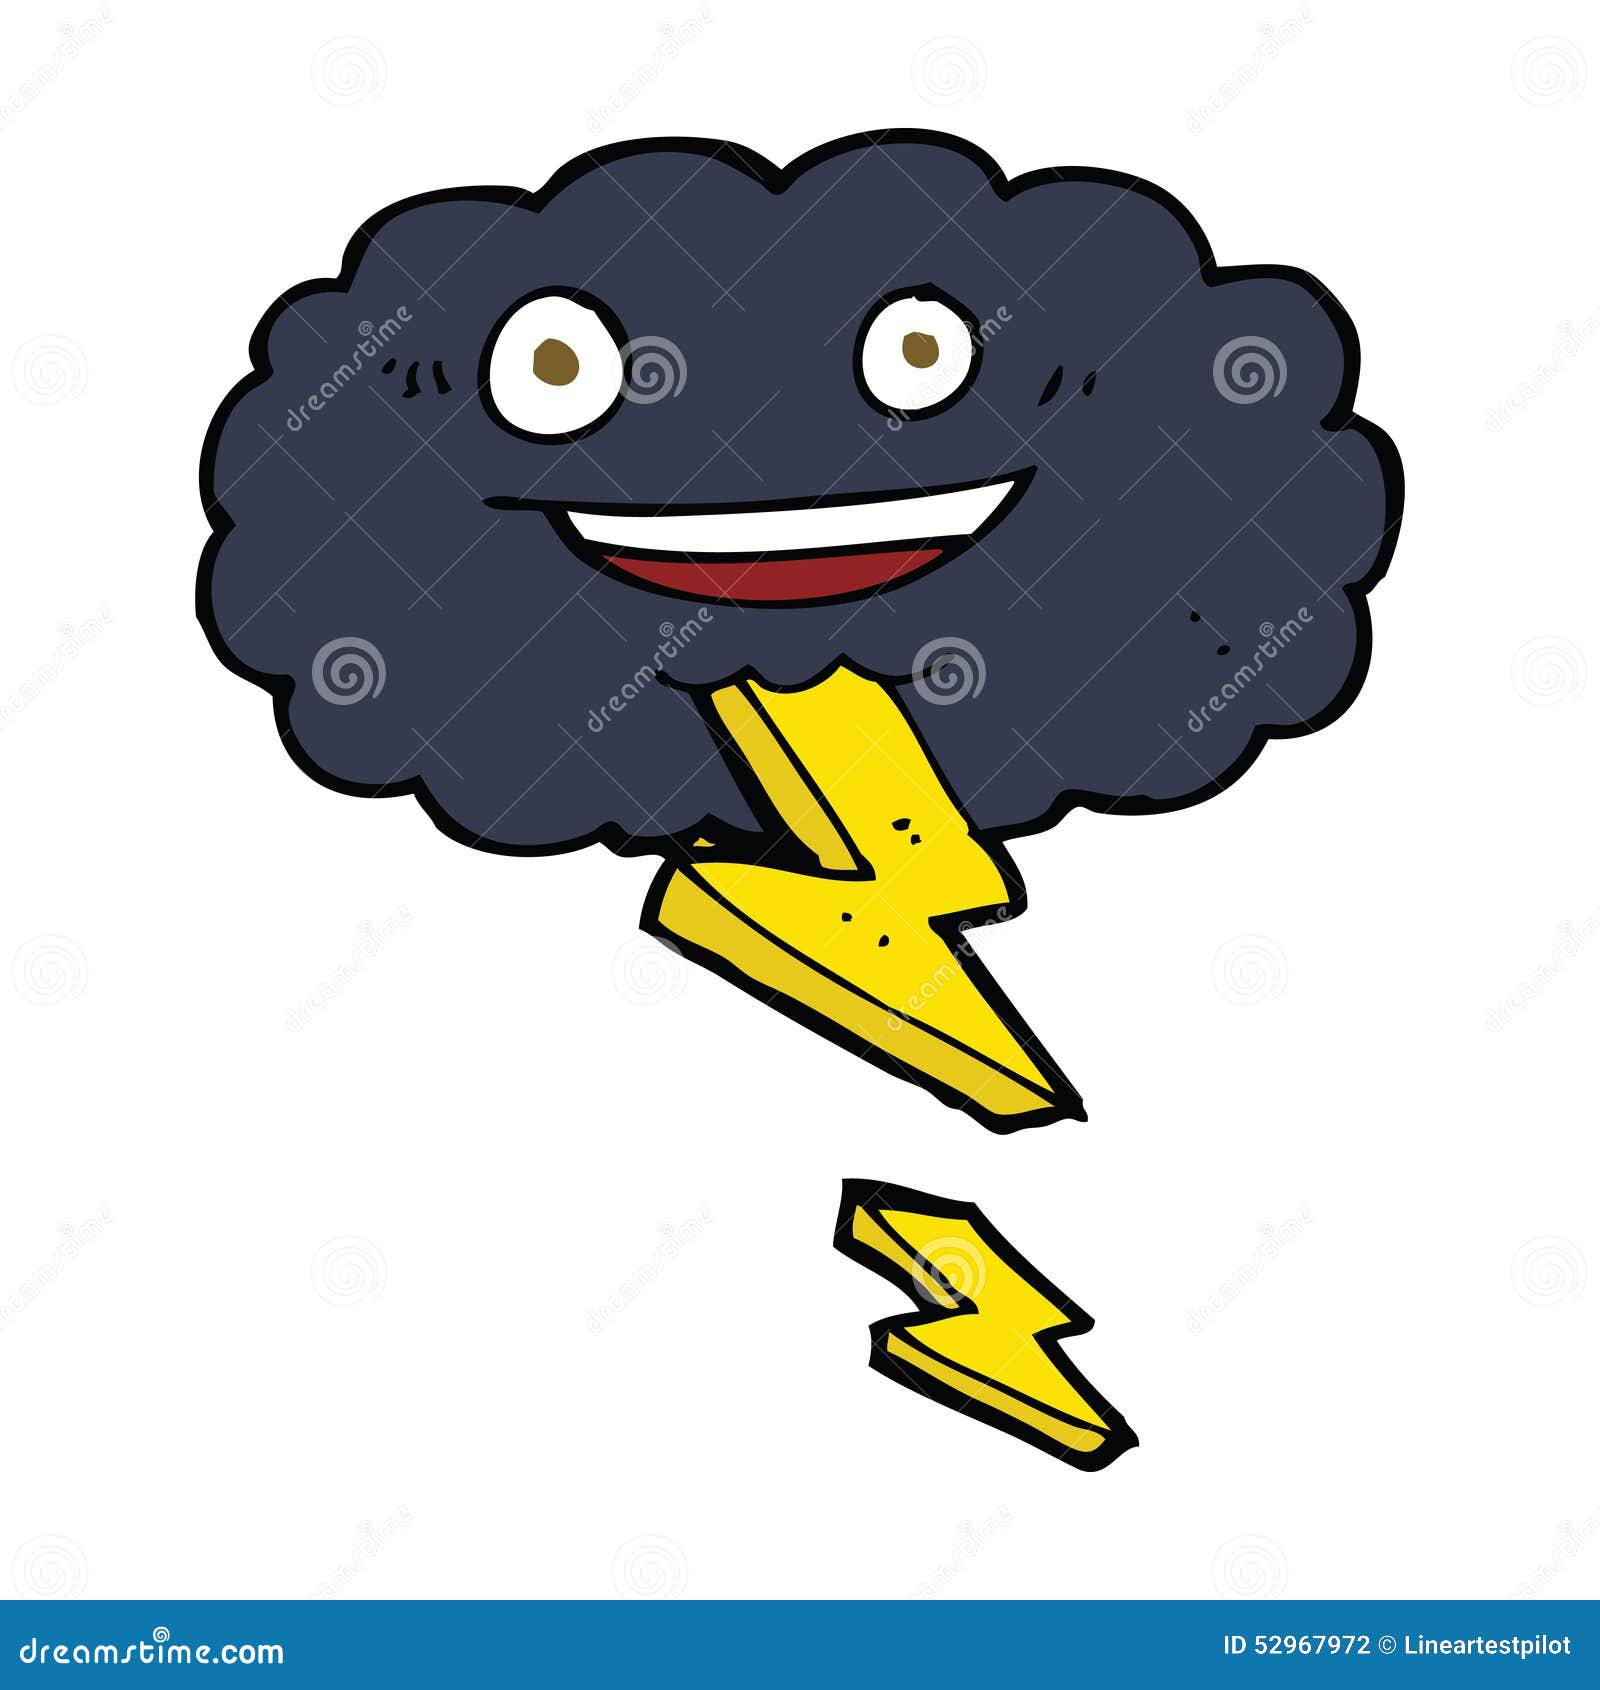 Cartoon storm cloud stock illustration. Illustration of design - 52967972